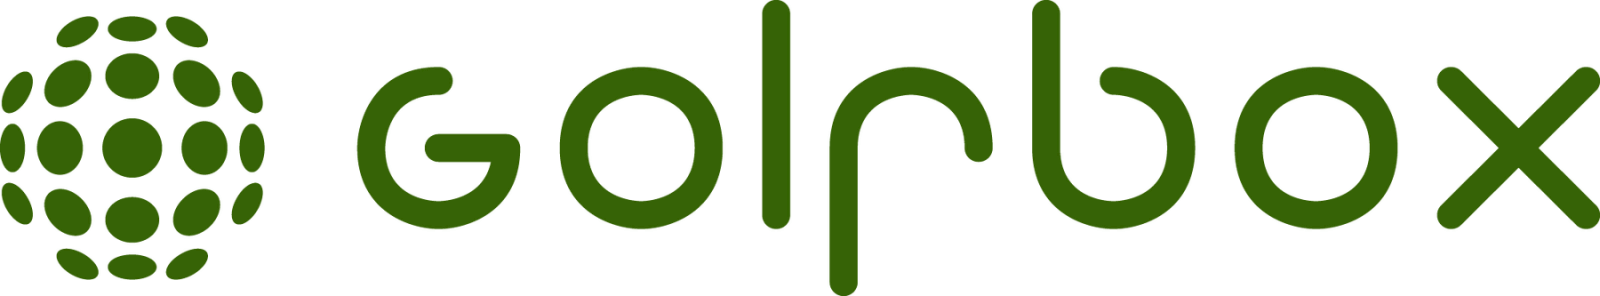 Golfbox logo